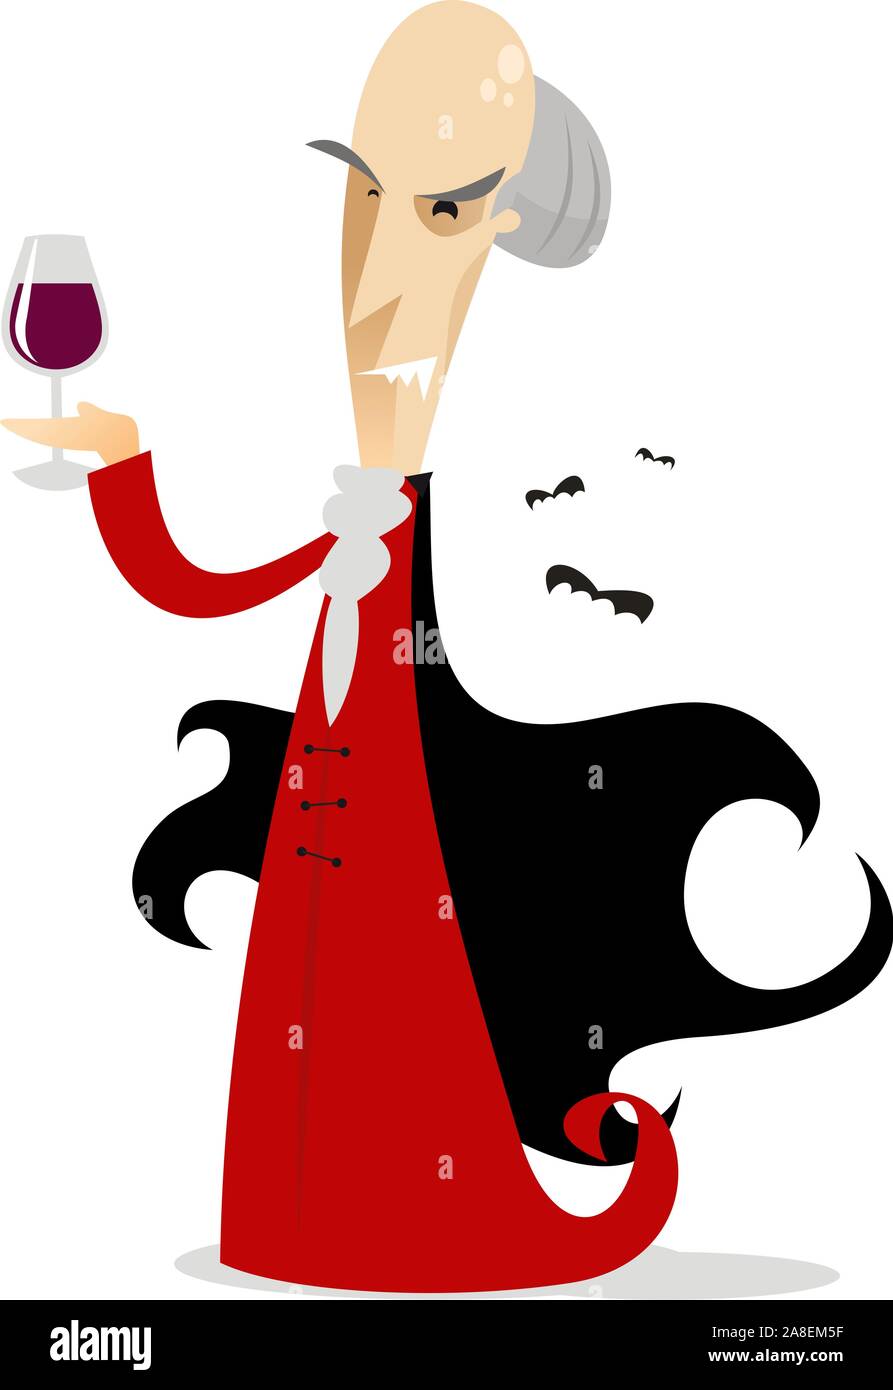 Count Dracula drinking blood cartoon illustration Stock Vector